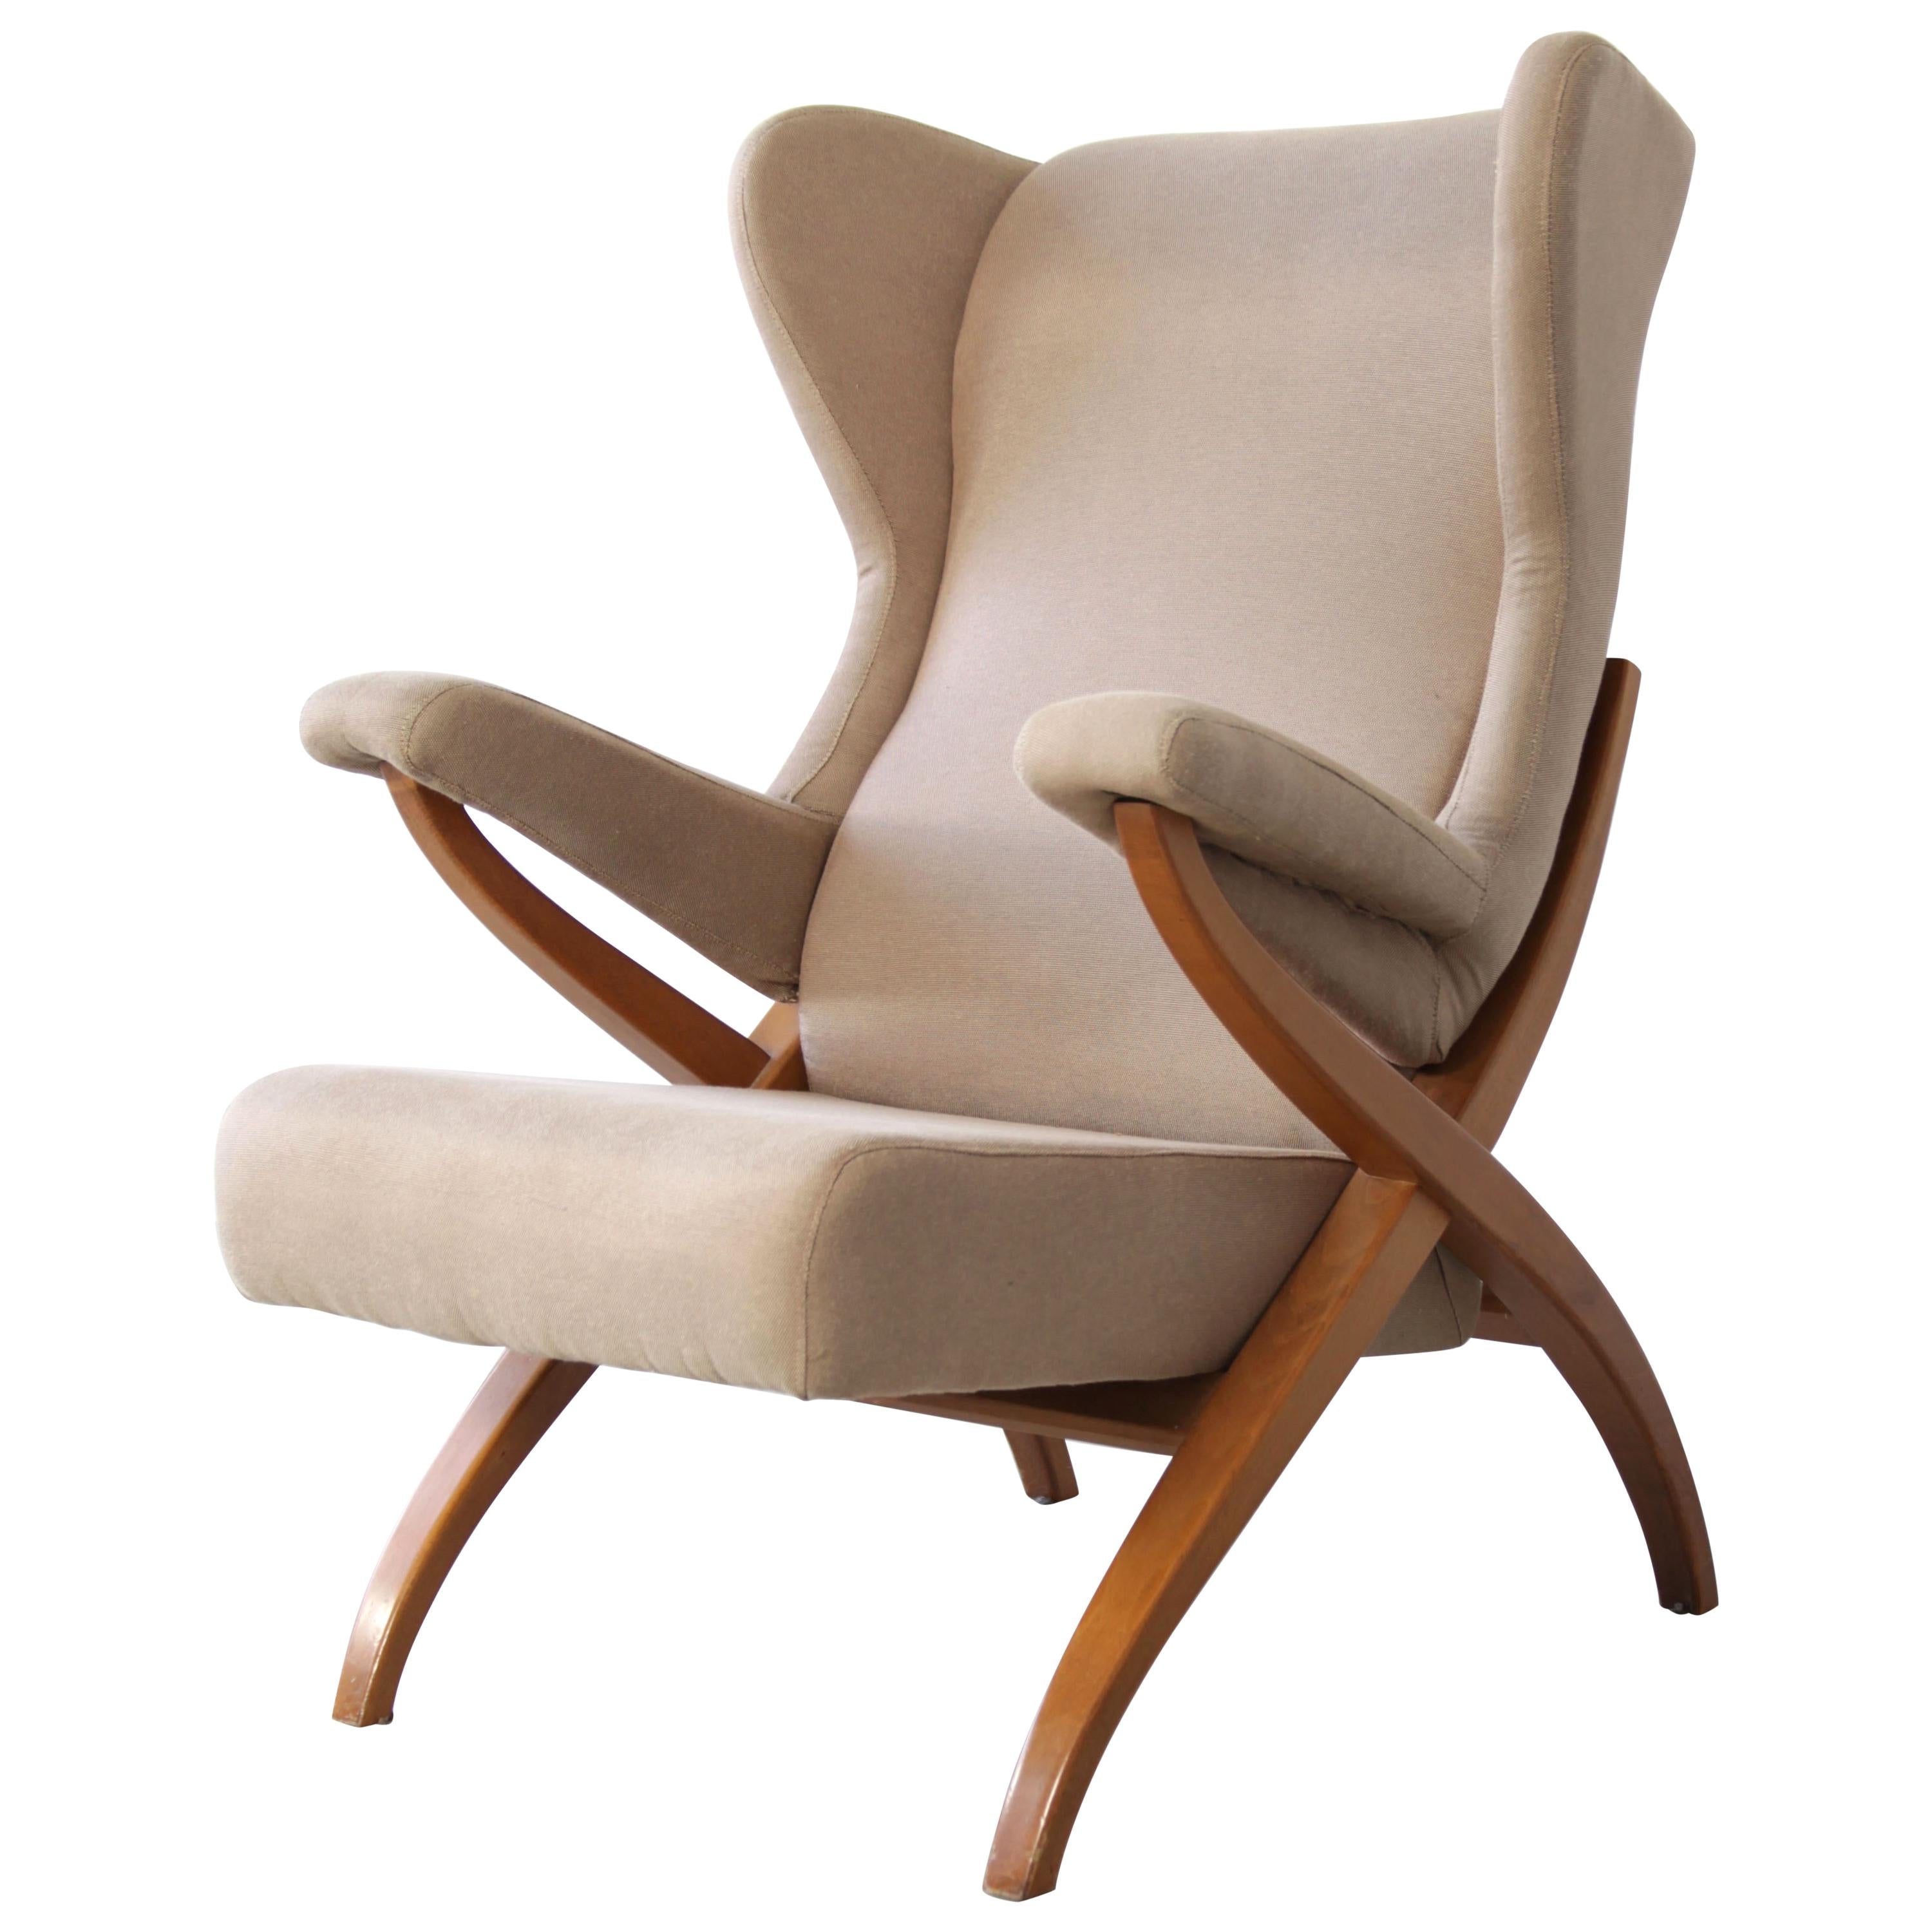 Armchair "Fiorenza" designed by Franco Albini in 1952 for Arflex, Italy.